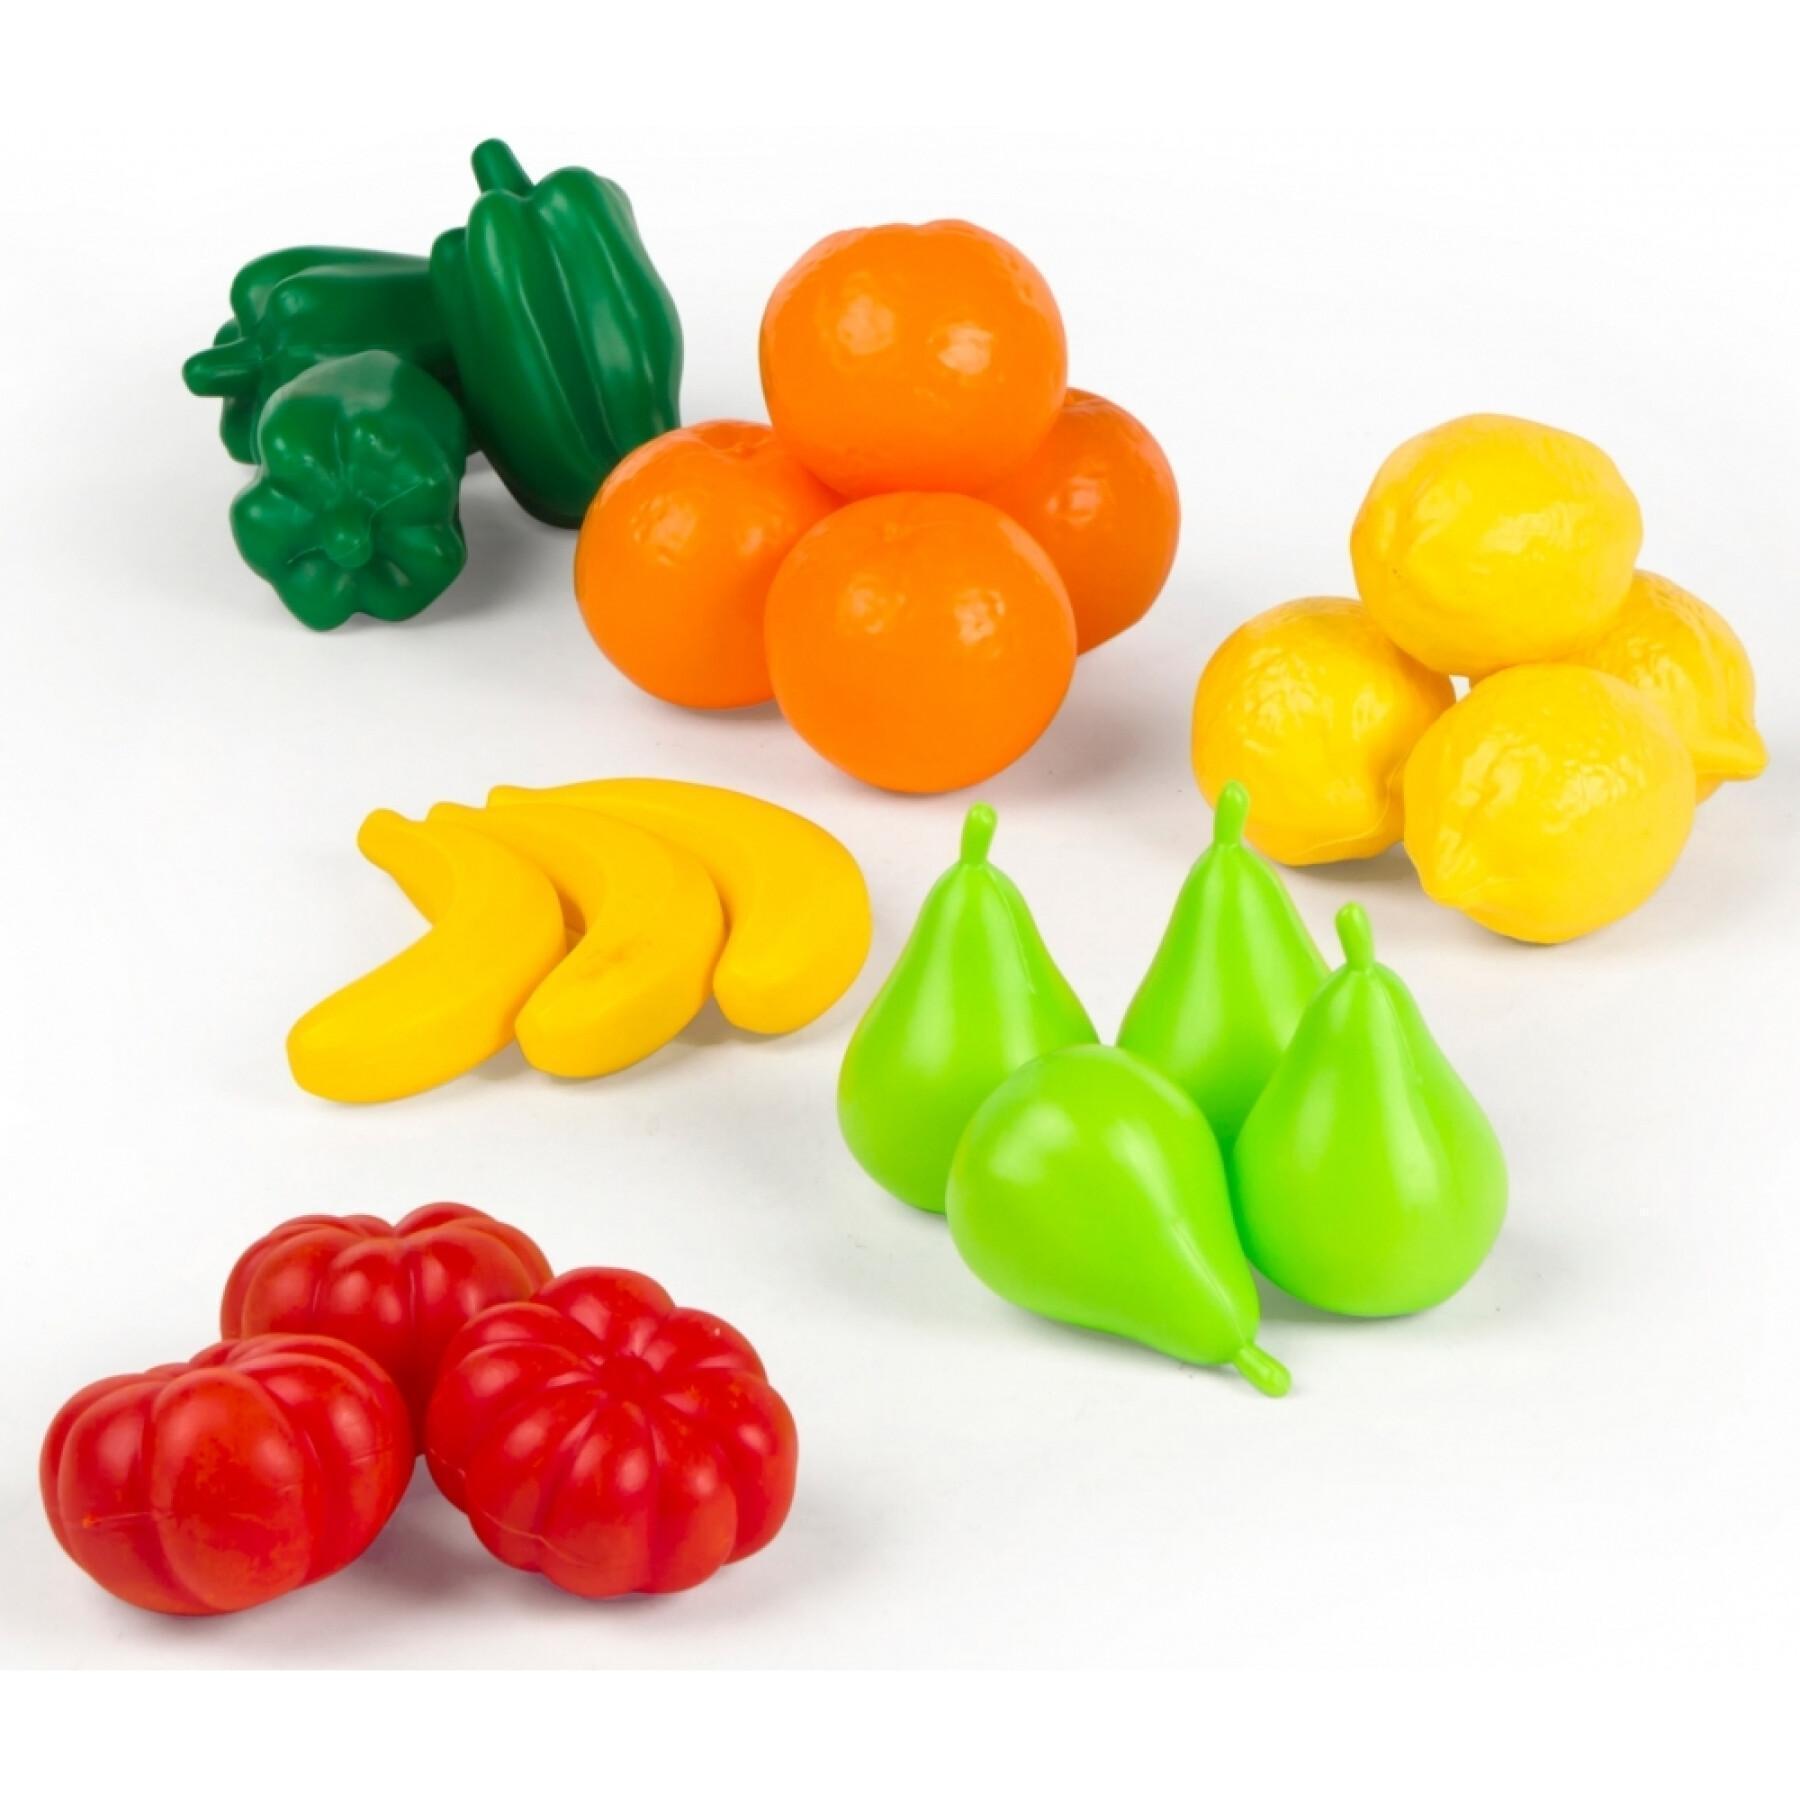 21-delige groente- en fruitset CB Toys 17x45